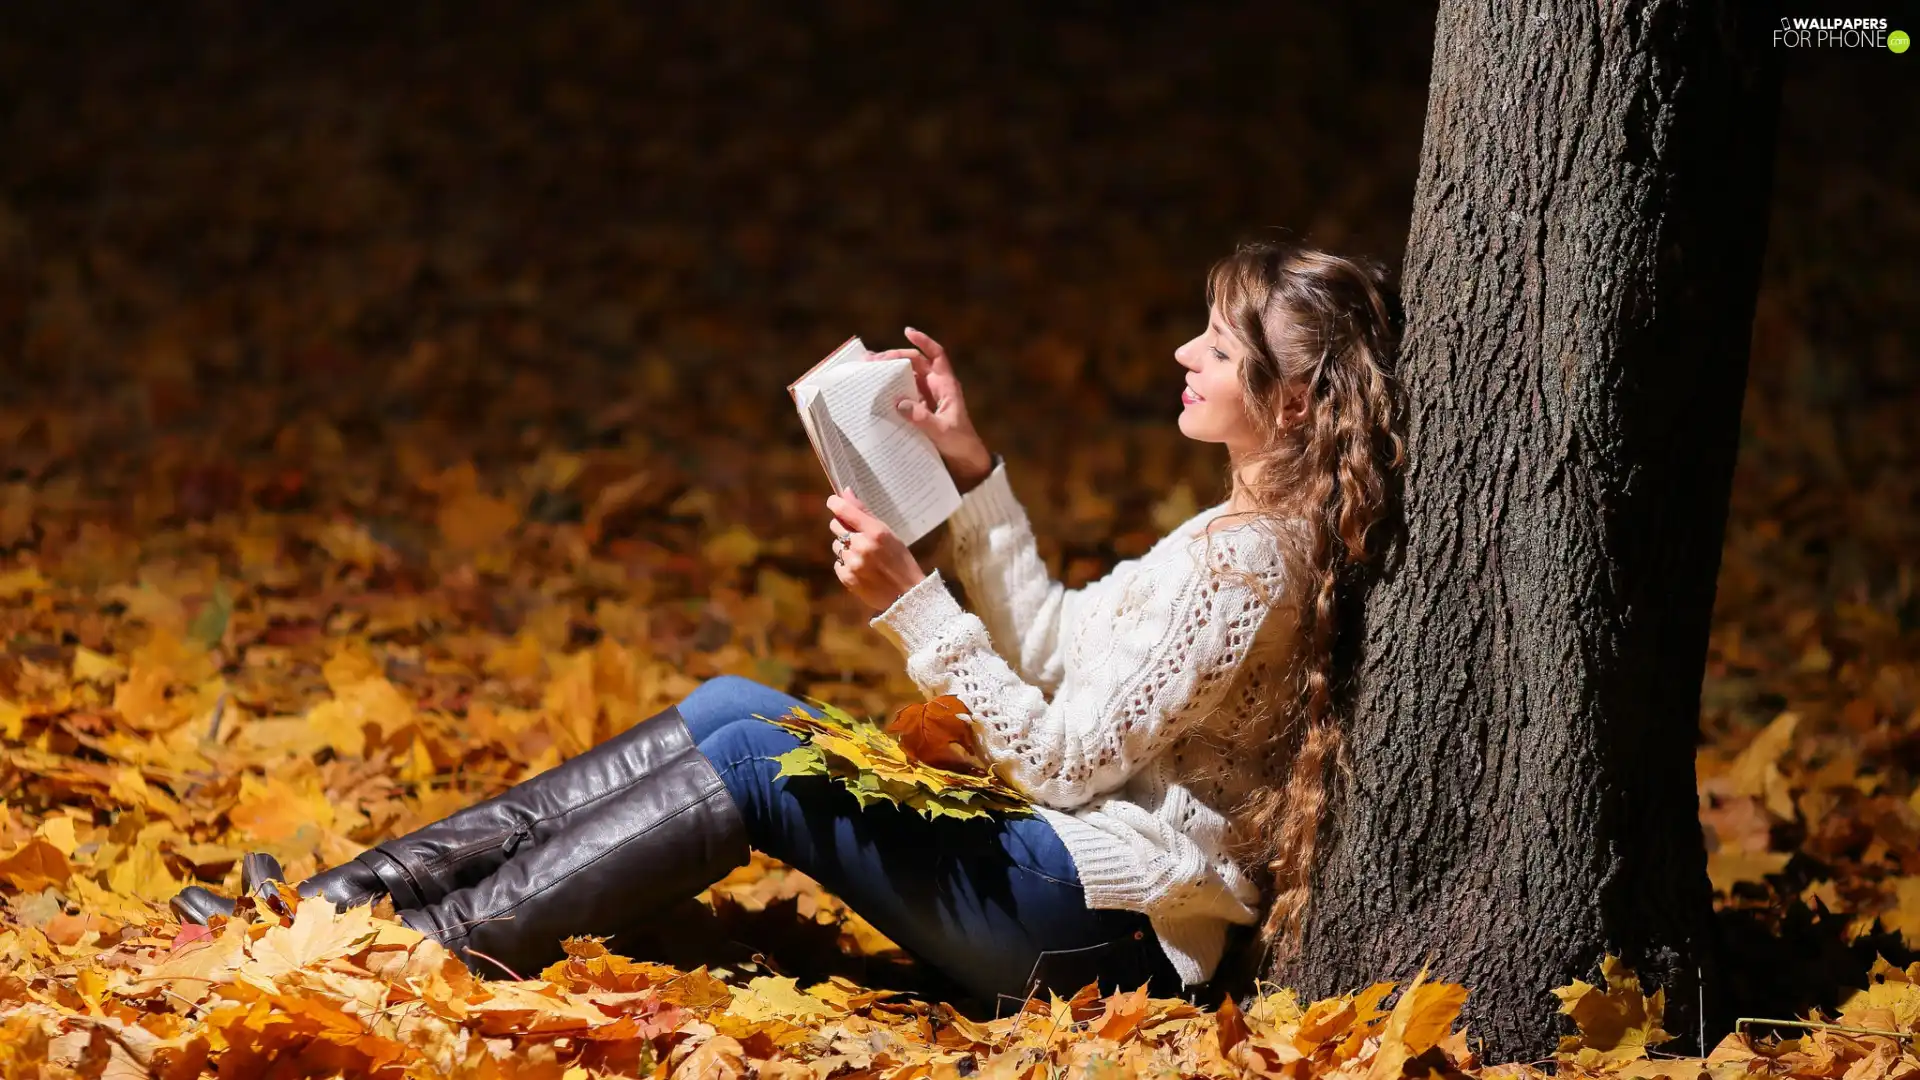 trees, Book, autumn, Leaf, Women